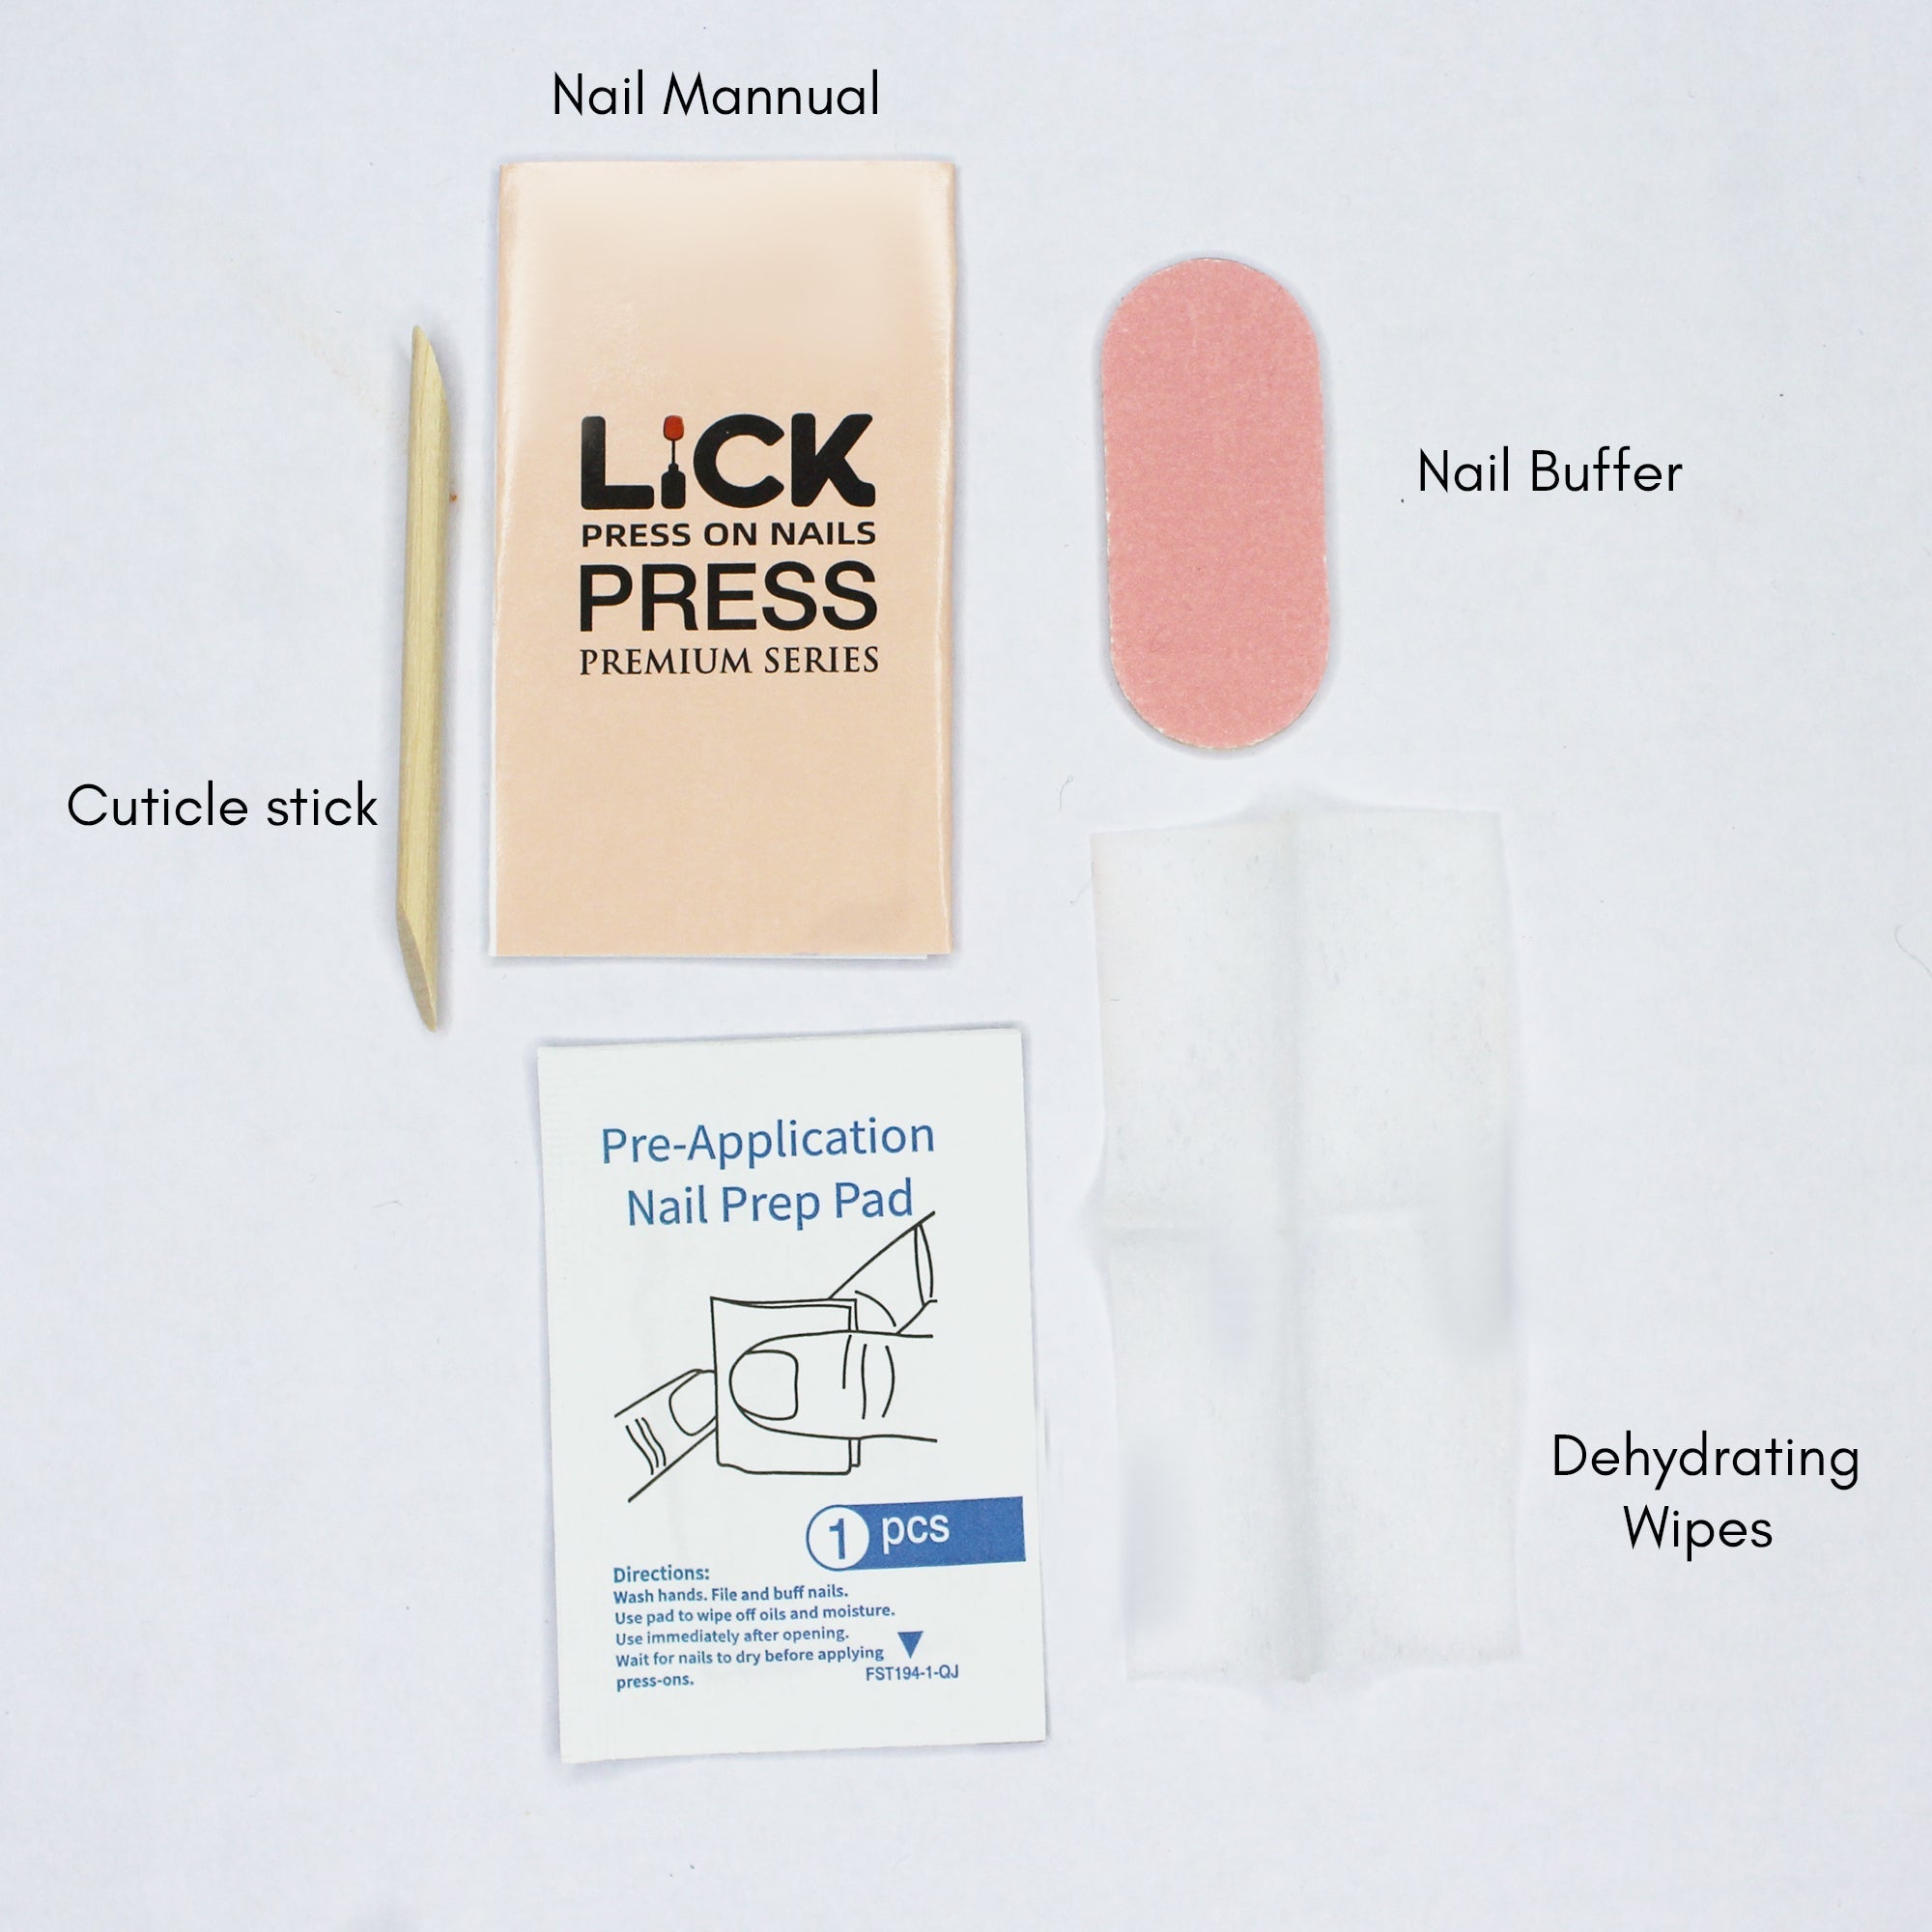 Lick Nail Glossy Finish Lavender Square Shape Press On Nails Pack Of 24 Pcs